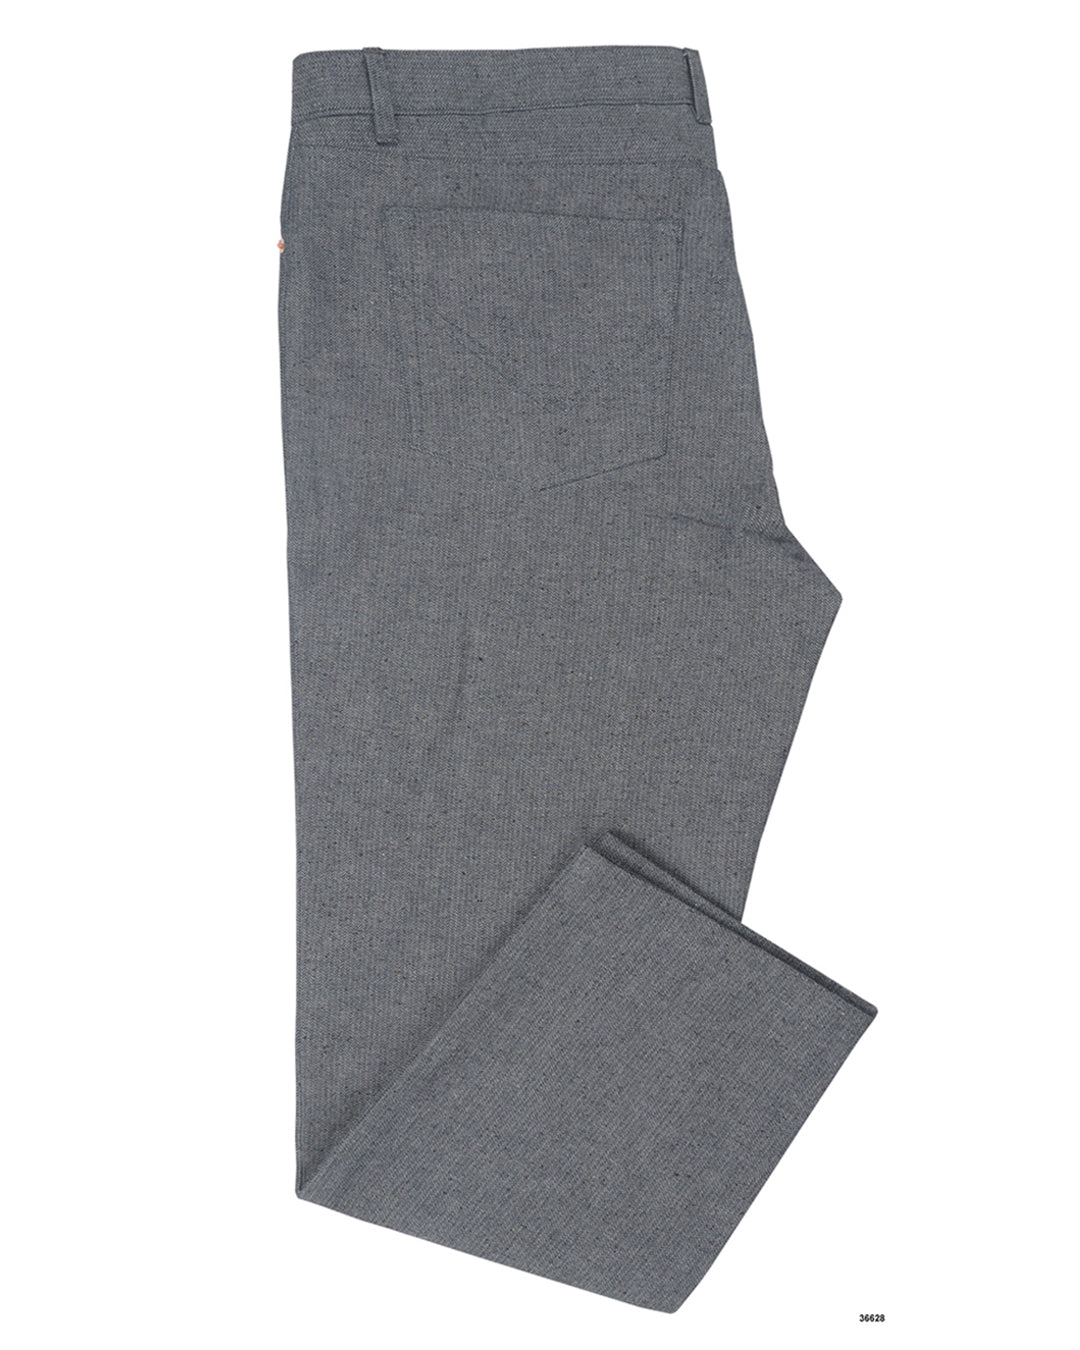 Side view of custom broken slub jeans for men by Luxire in navy grey